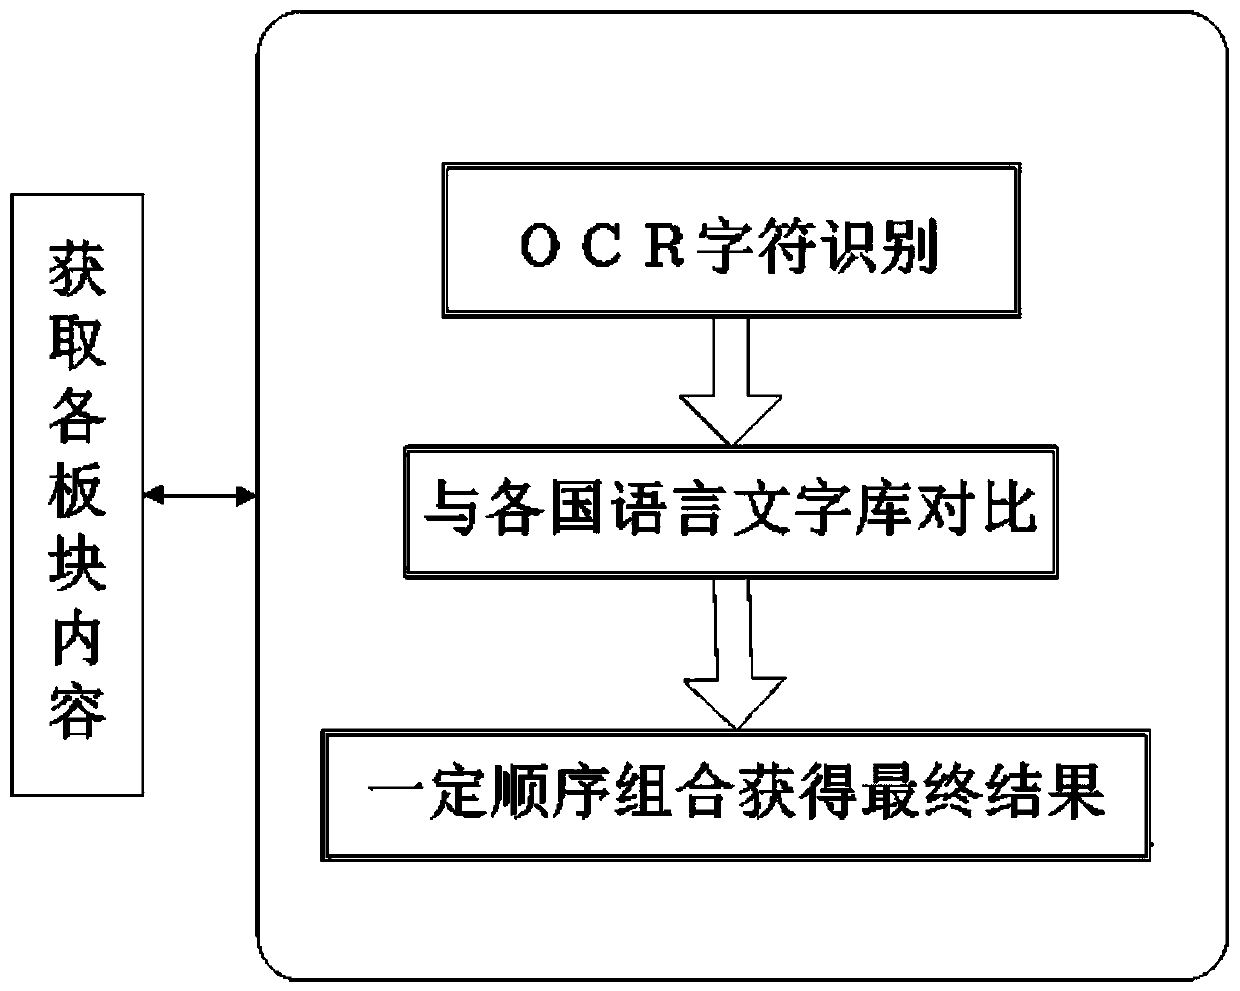 A language conversion server system